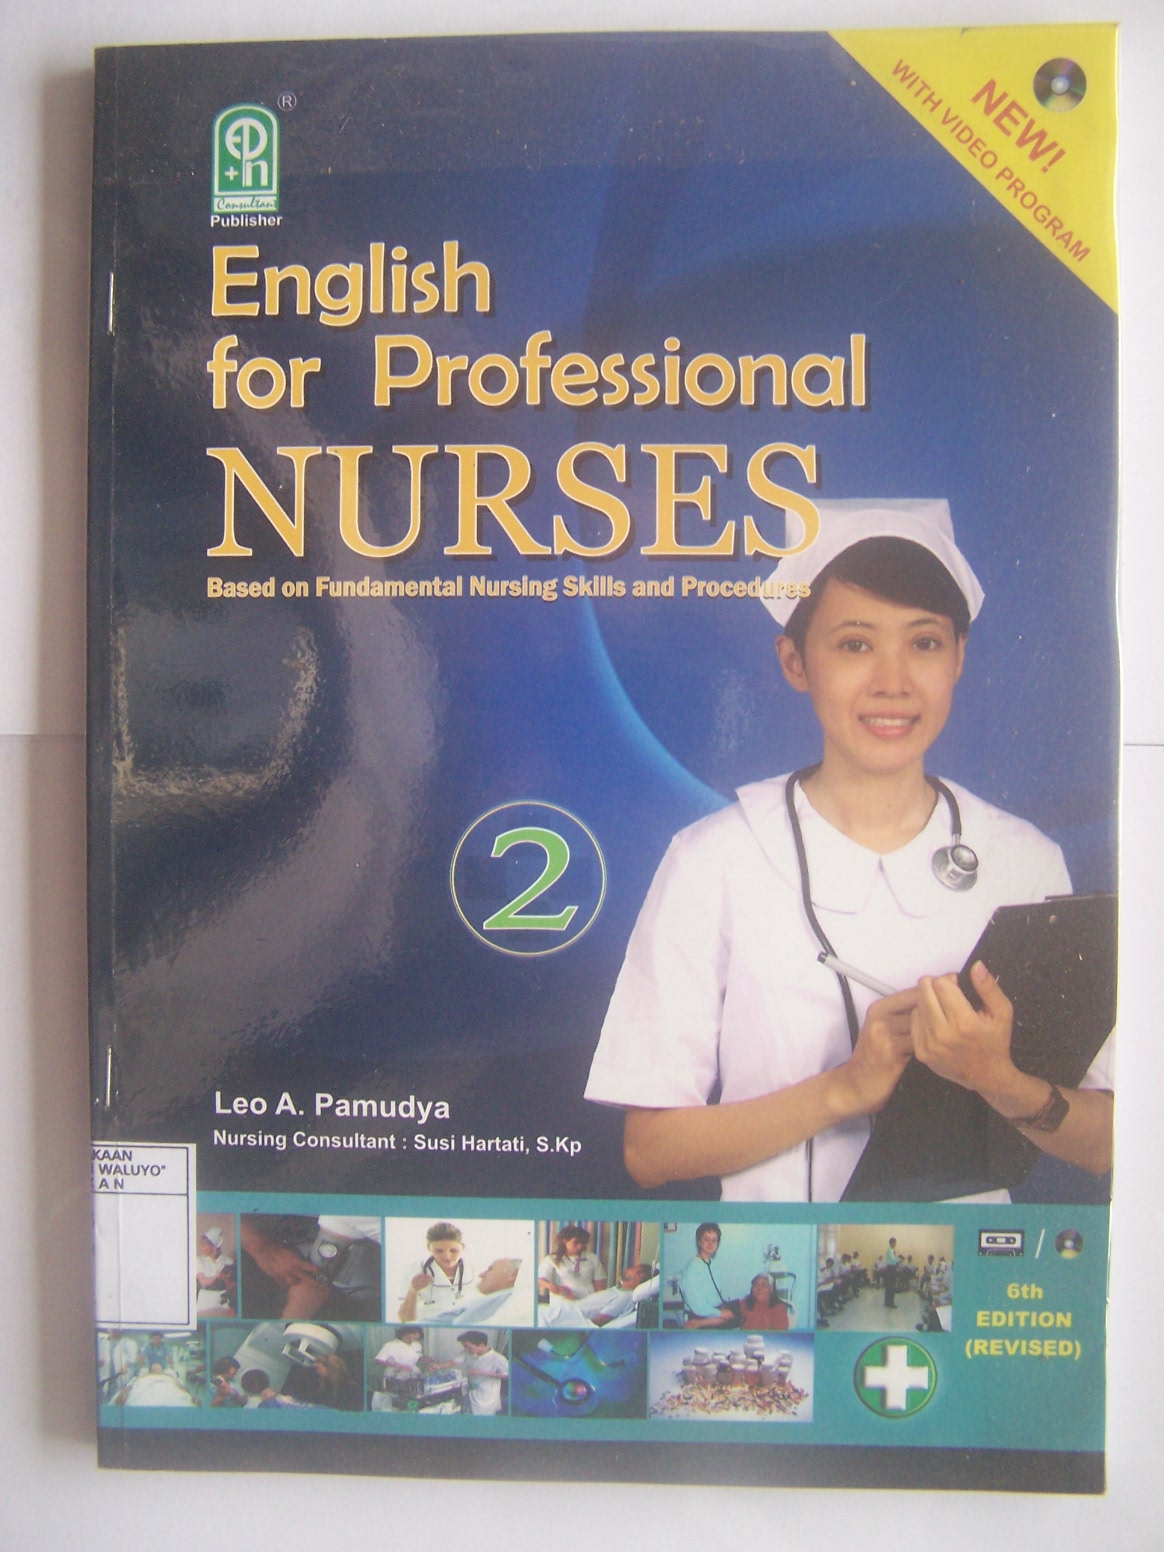 English For Professional Nurses 2 (Based on Fundamental Nursing Skills and Procedures)